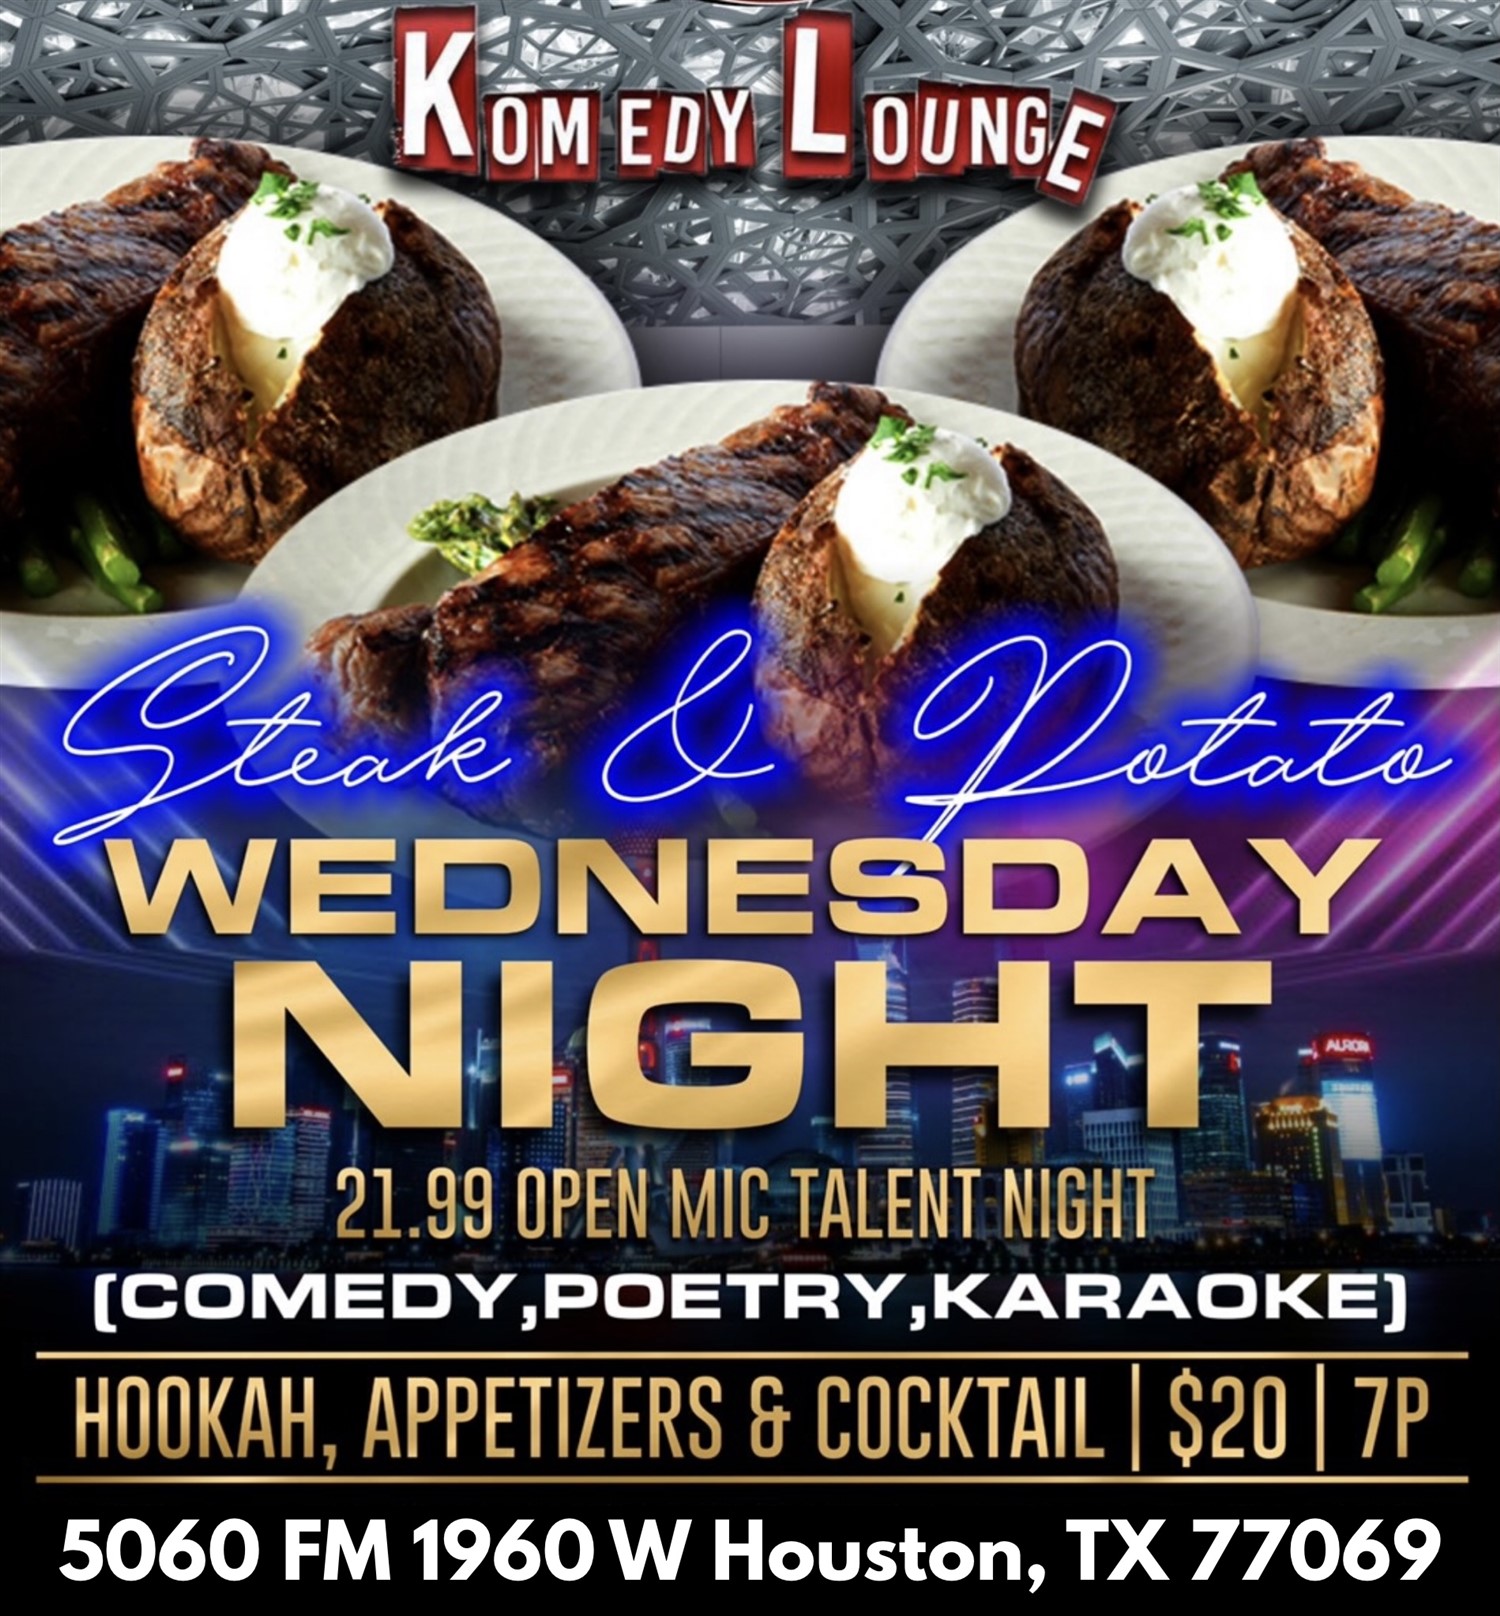 Wednesday Open Mic Talent Night Steak & Potato $21.99 on sep. 02, 00:00@Komedy Lounge - Buy tickets and Get information on komedylounge.com 